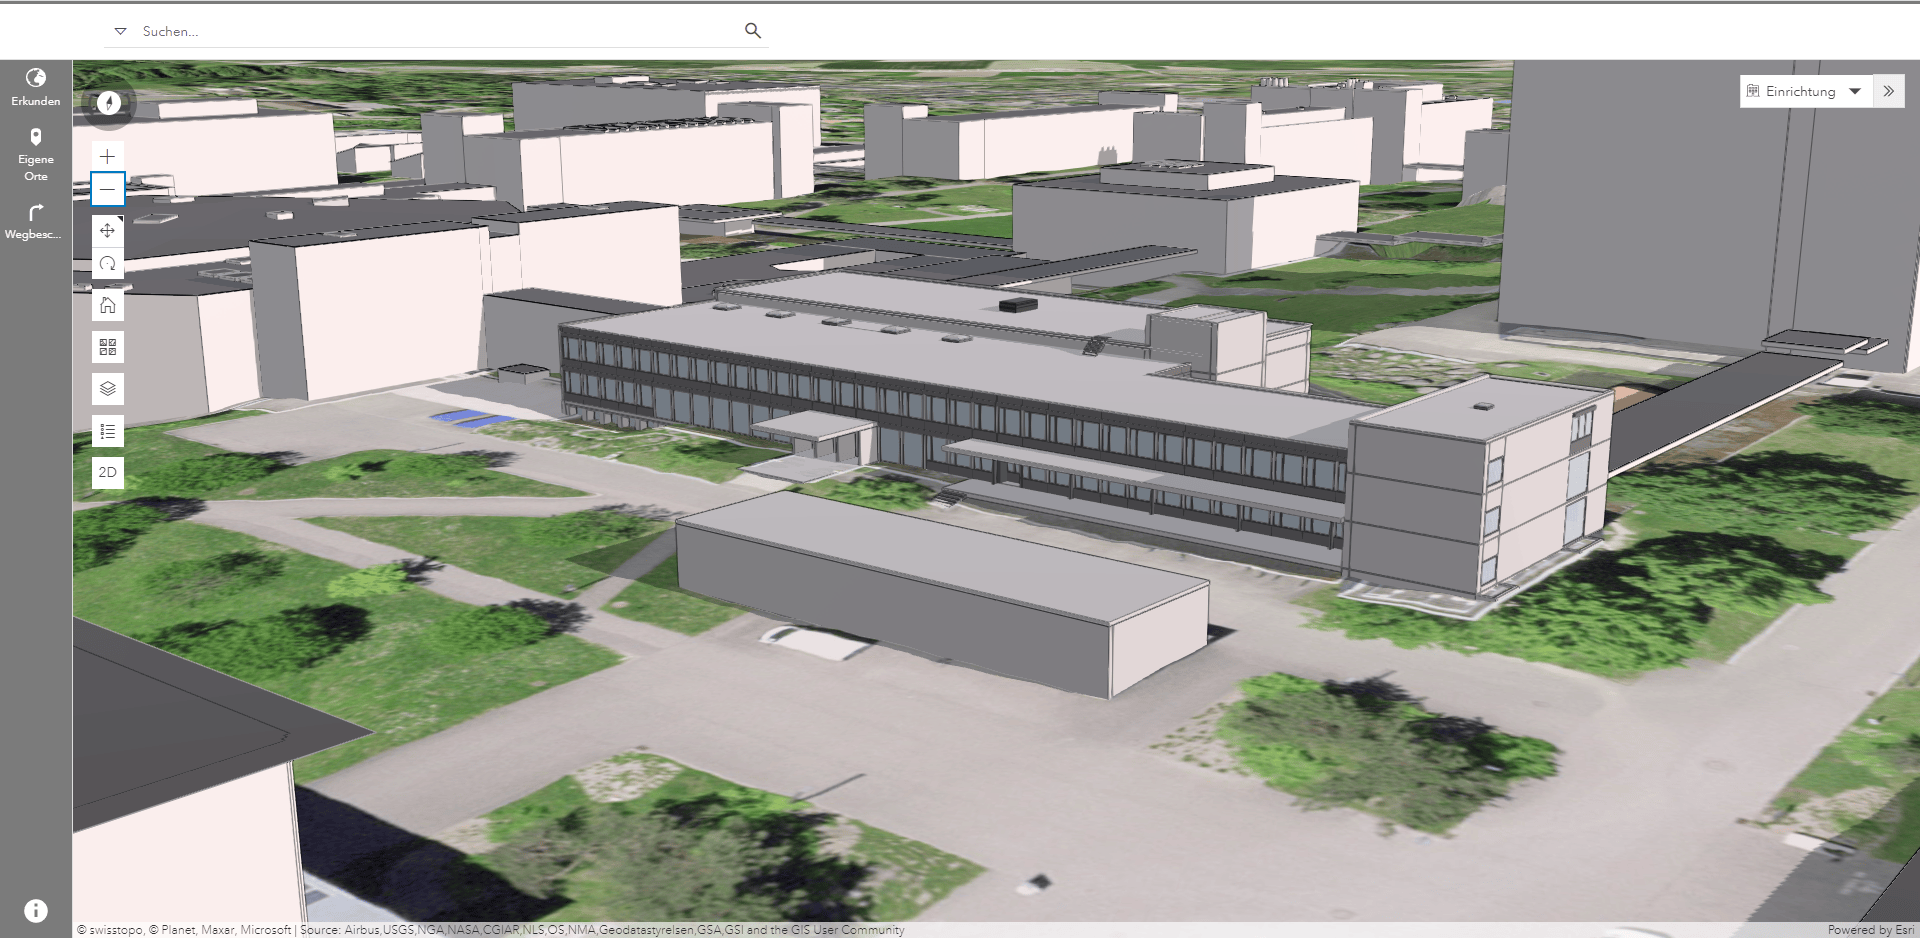 ETH Zurich creates a smart campus, Virtual 3D model of the ETH Zurich campus Hönggerberg